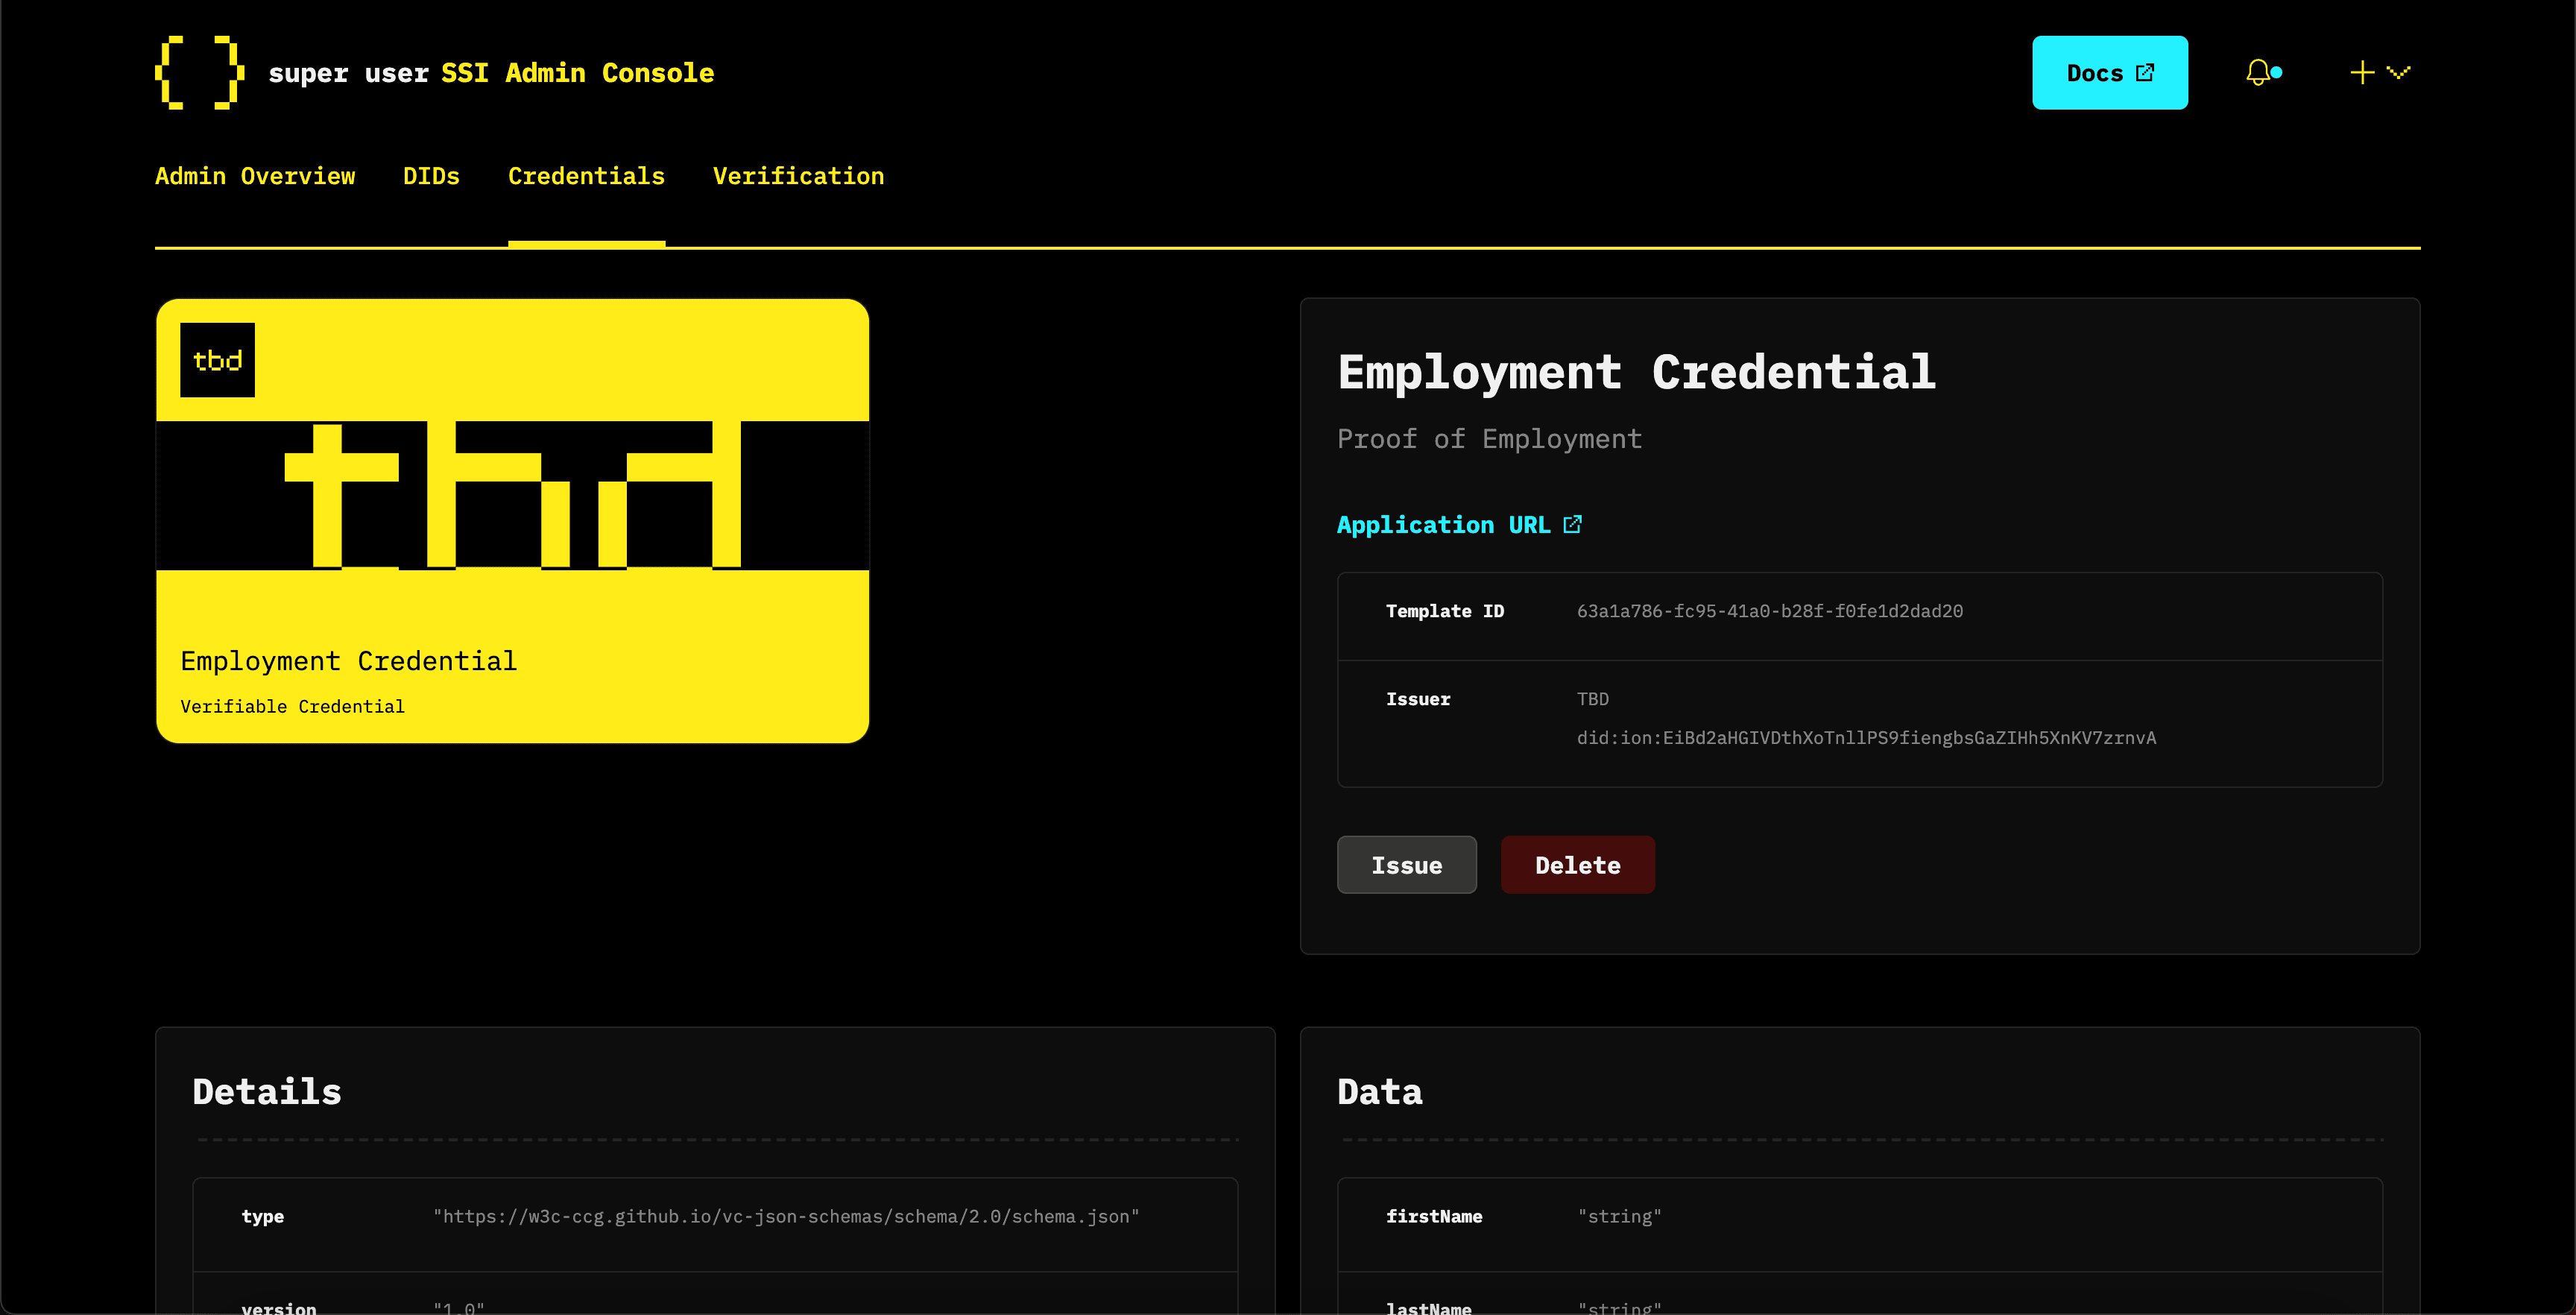 Employment Credential